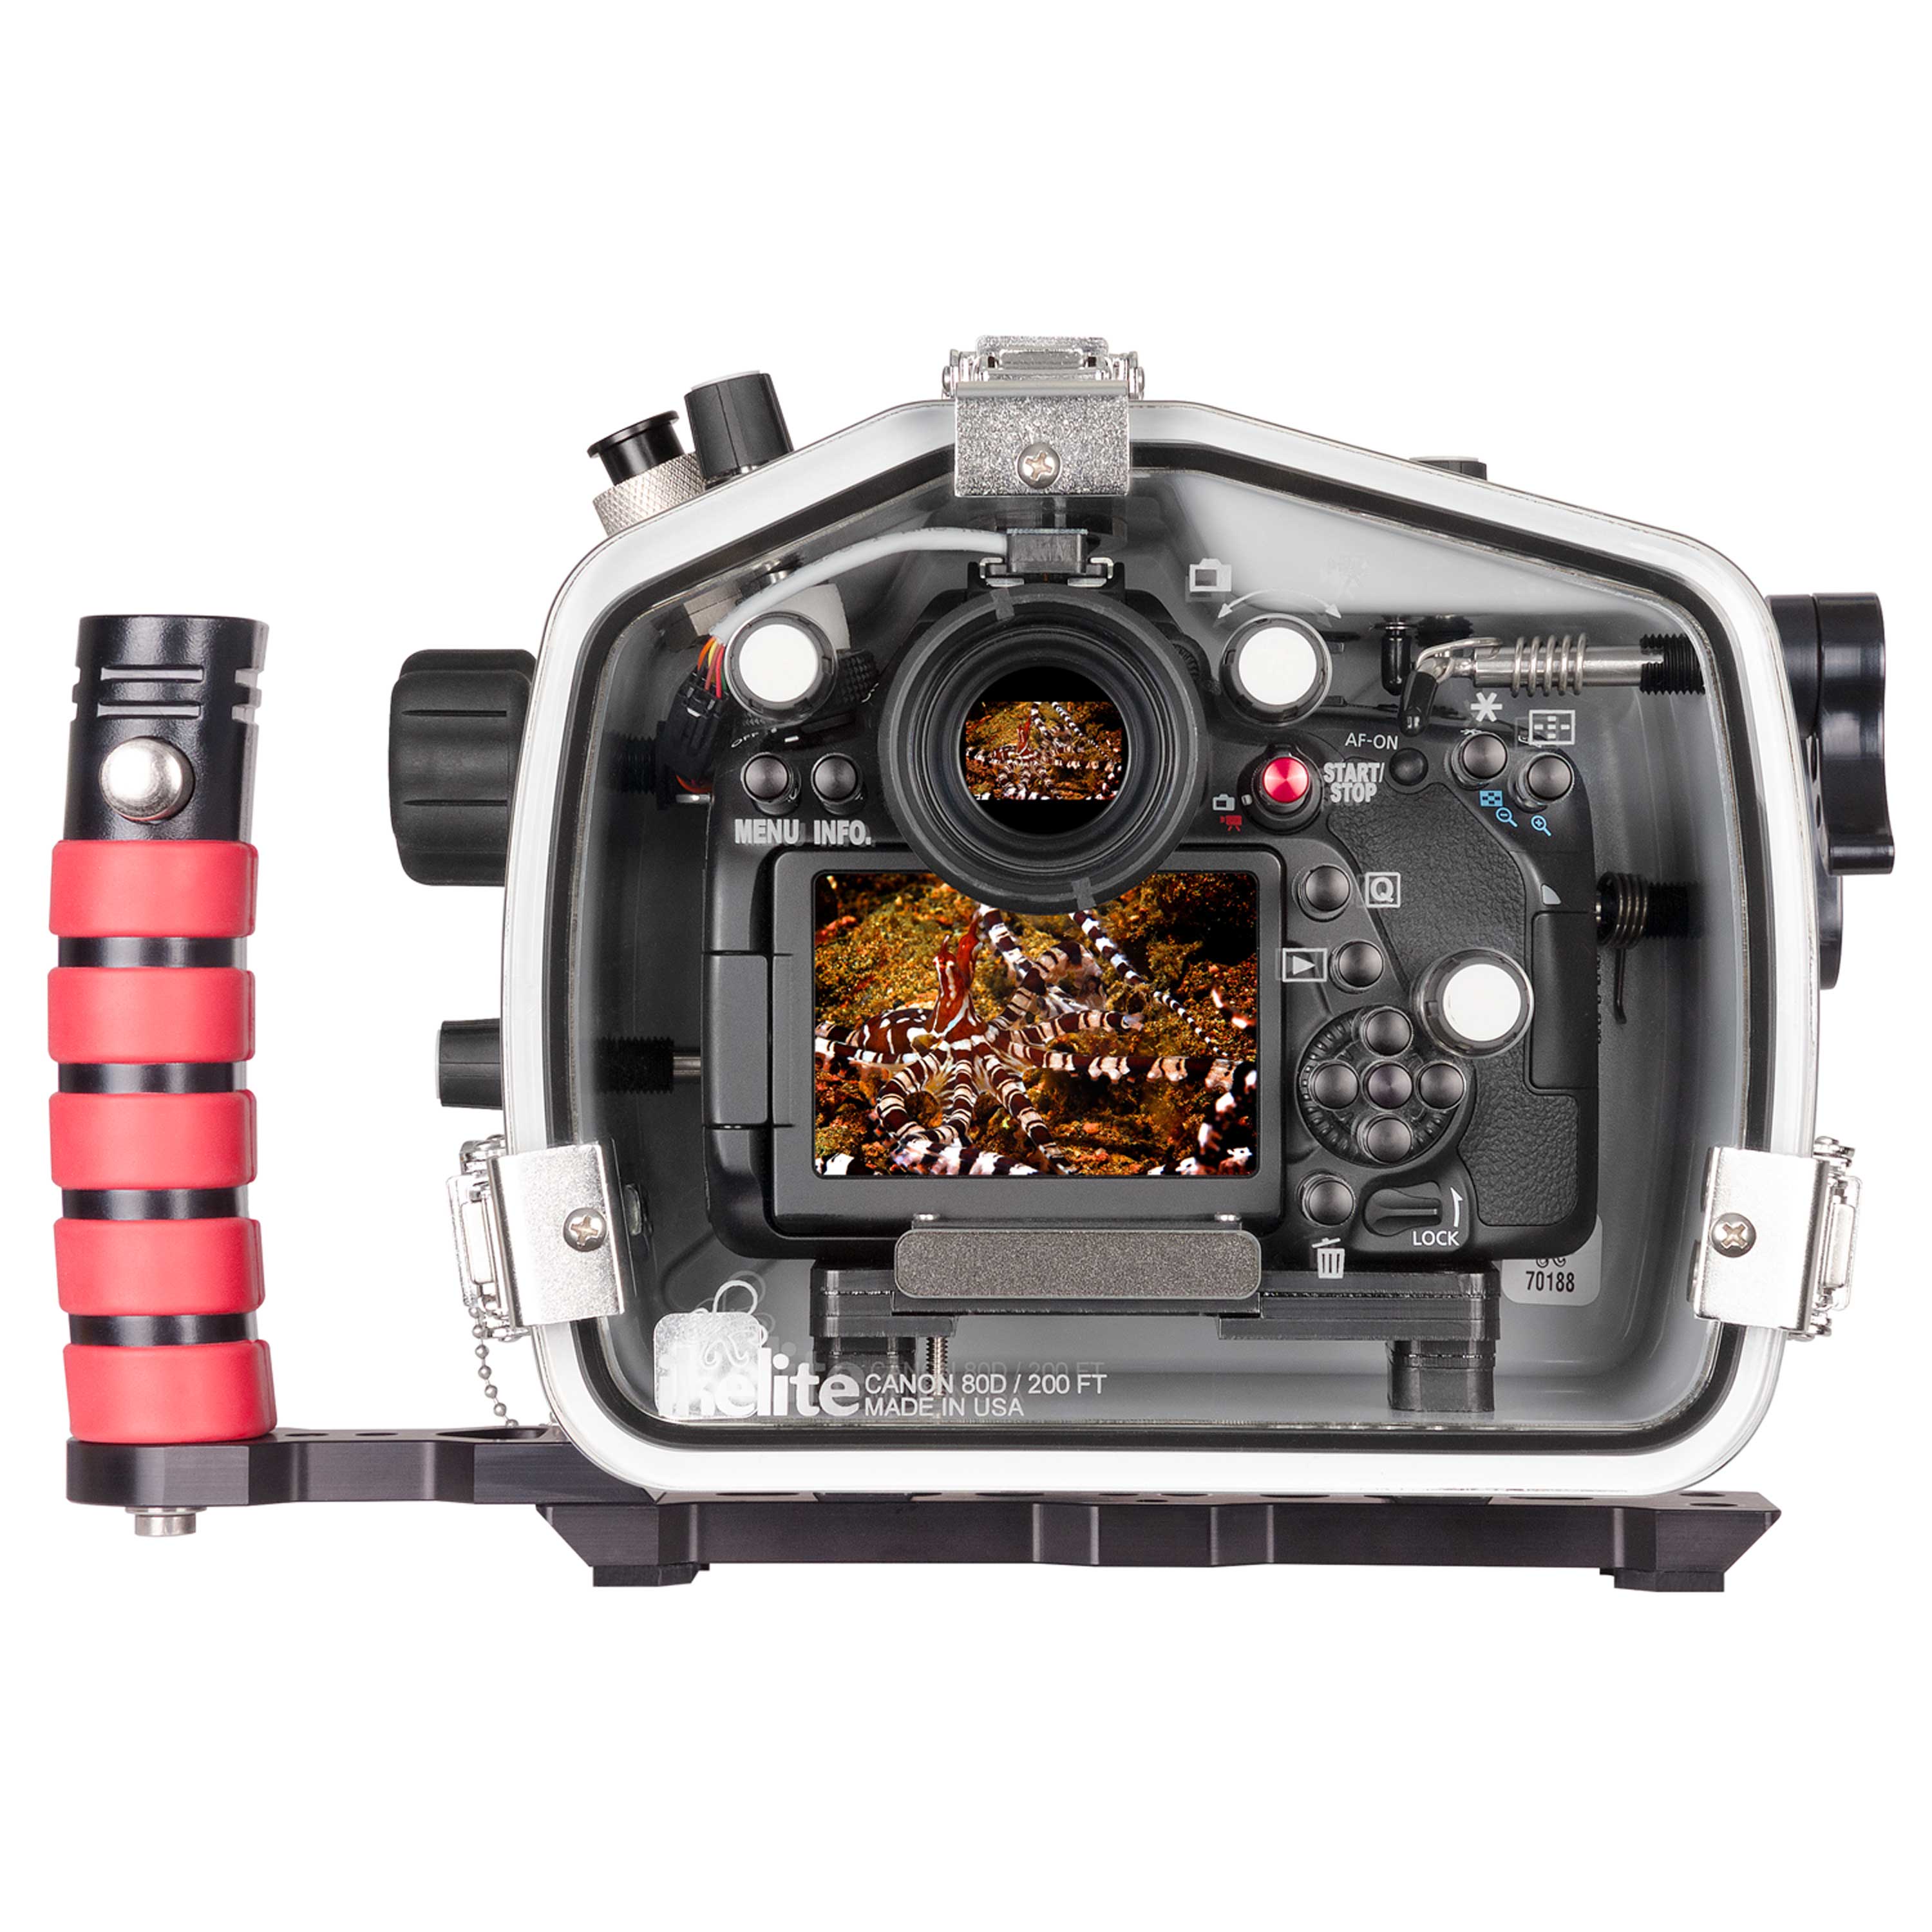 200DL Underwater Housing for Canon EOS 80D DSLR Cameras